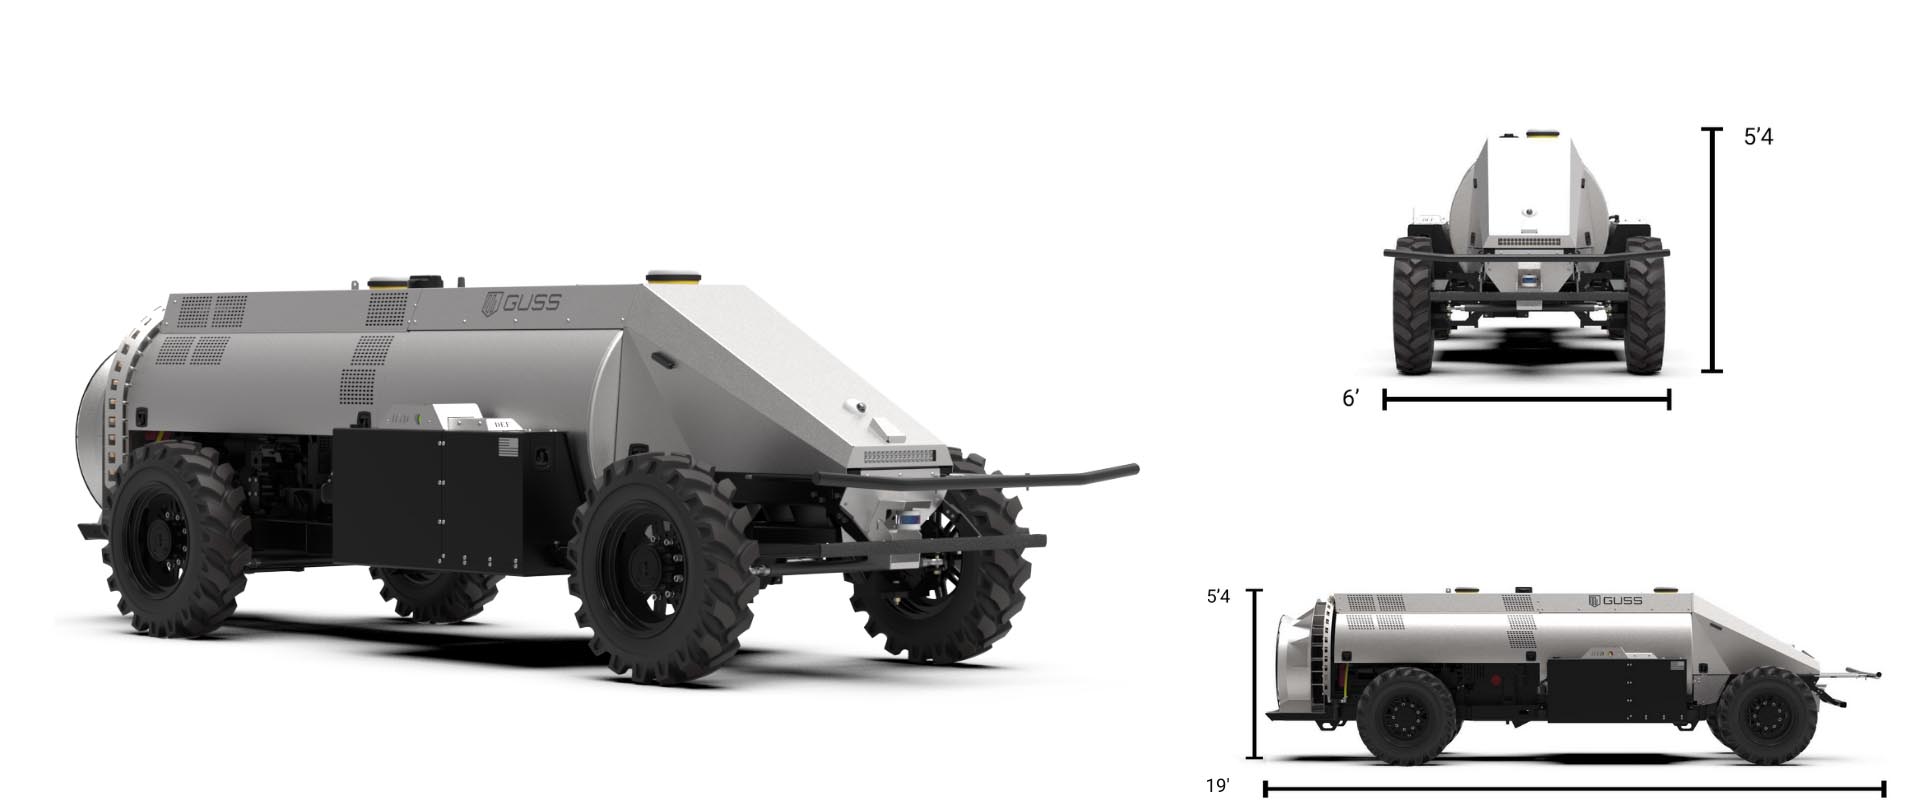 Mini GUSS autonomous sprayer. 5 feet 4 inches tall, 19 feet long, 6 feet wide.